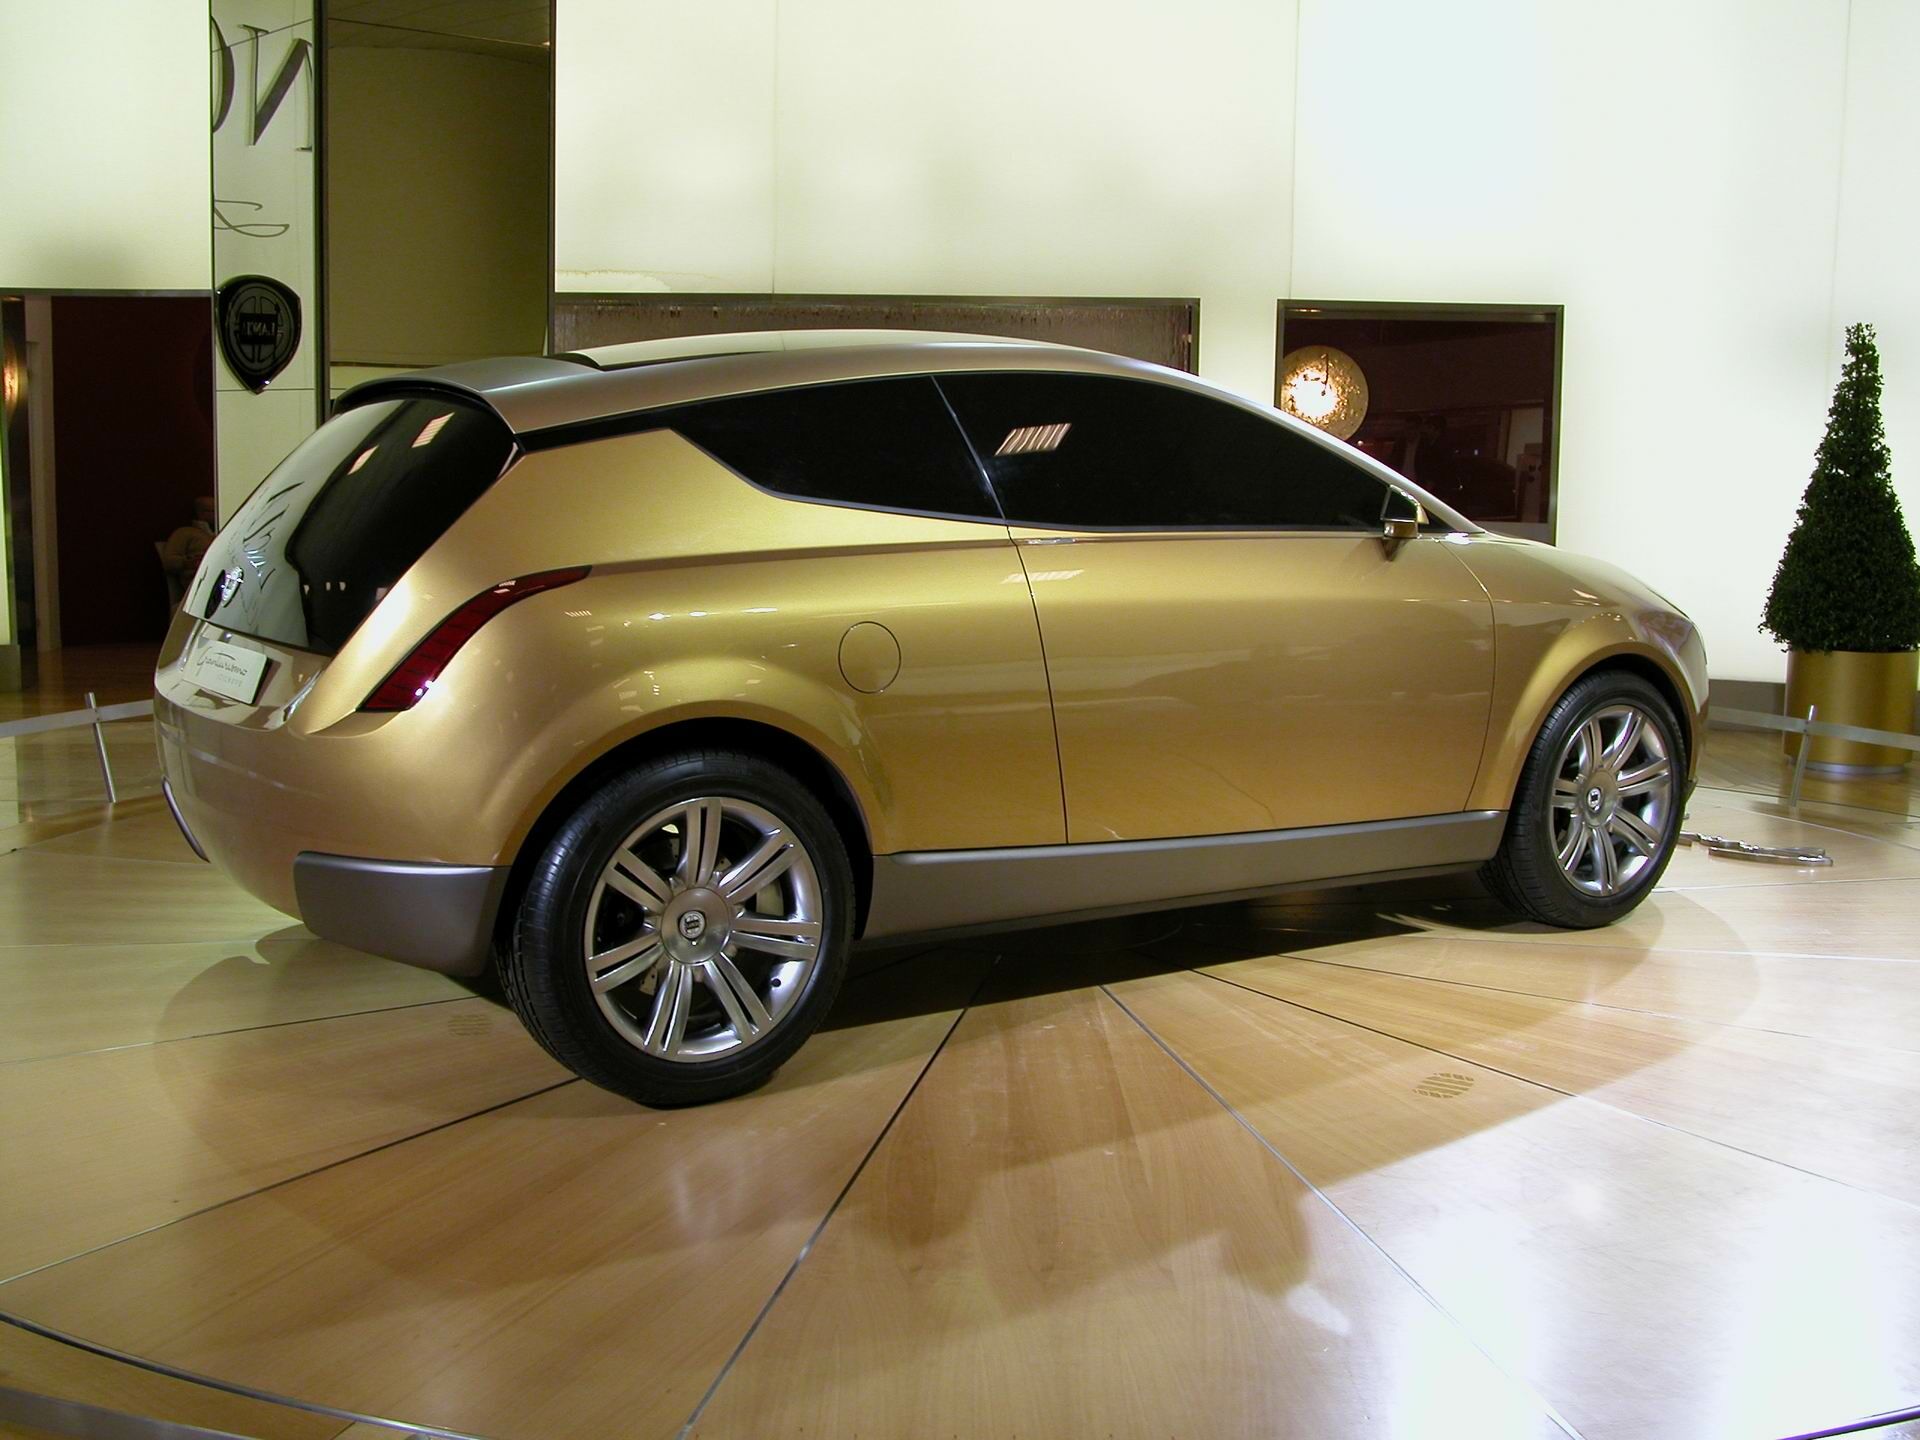 the Lancia Granturismo Stilnovo concept receives its world premiere at the 2003 Barcelona Motor Show